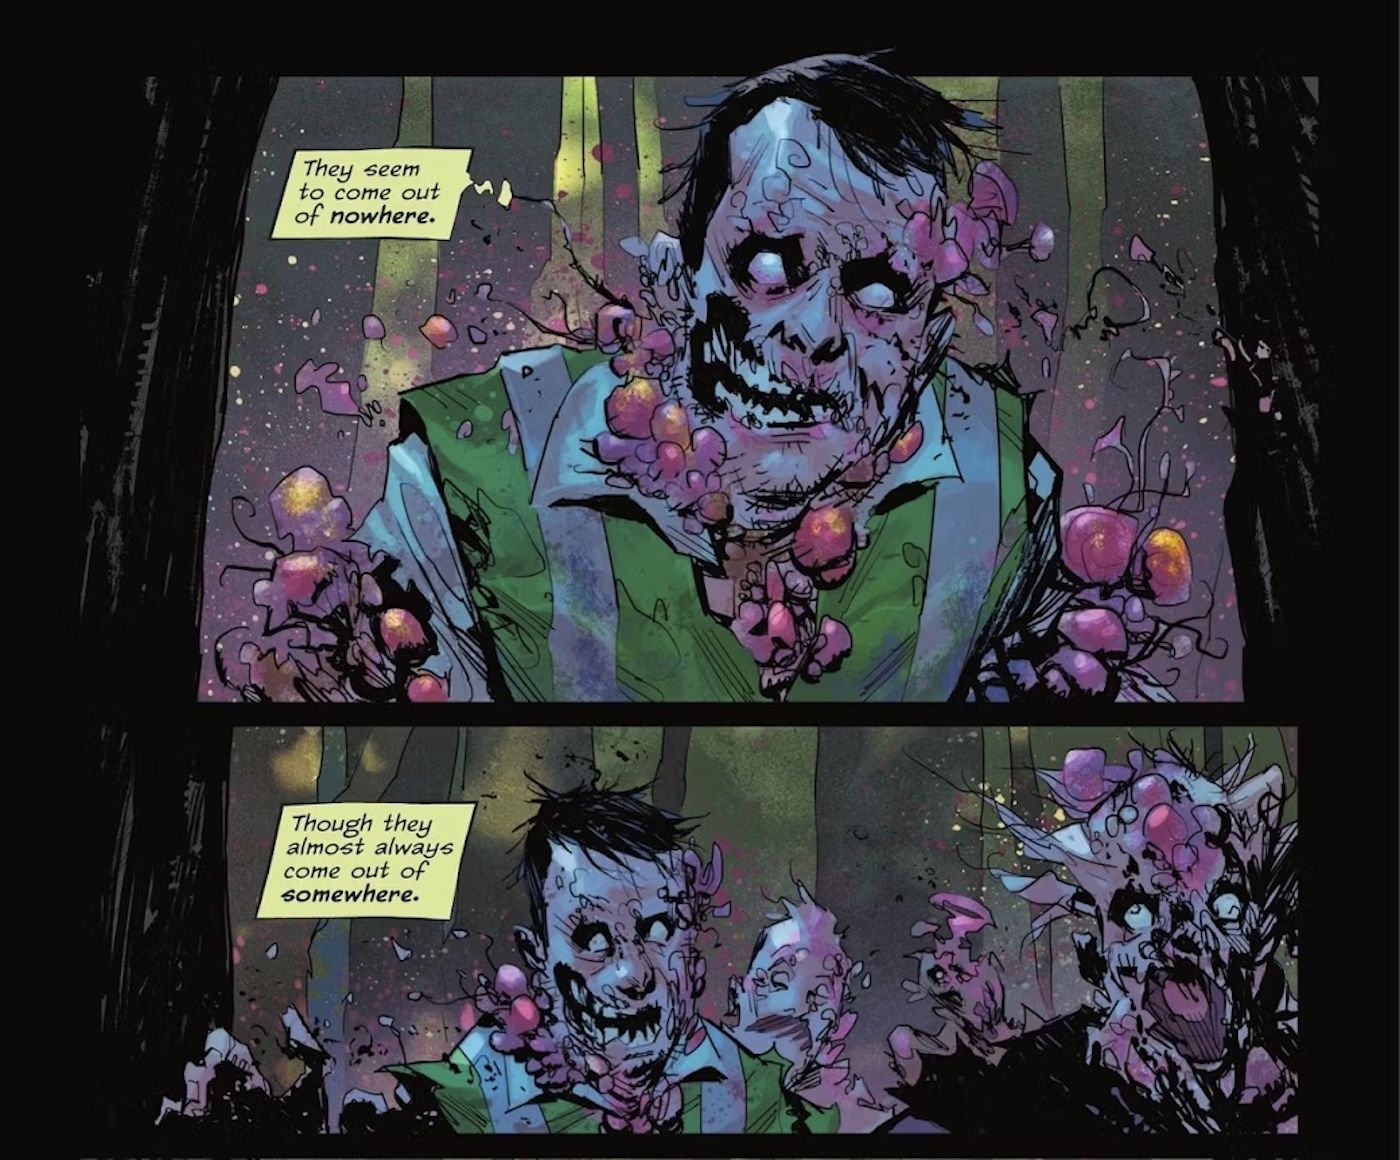 The Next DCeased?: DC’s Next “Zombie” Threat Has a Surprising Gotham Origin